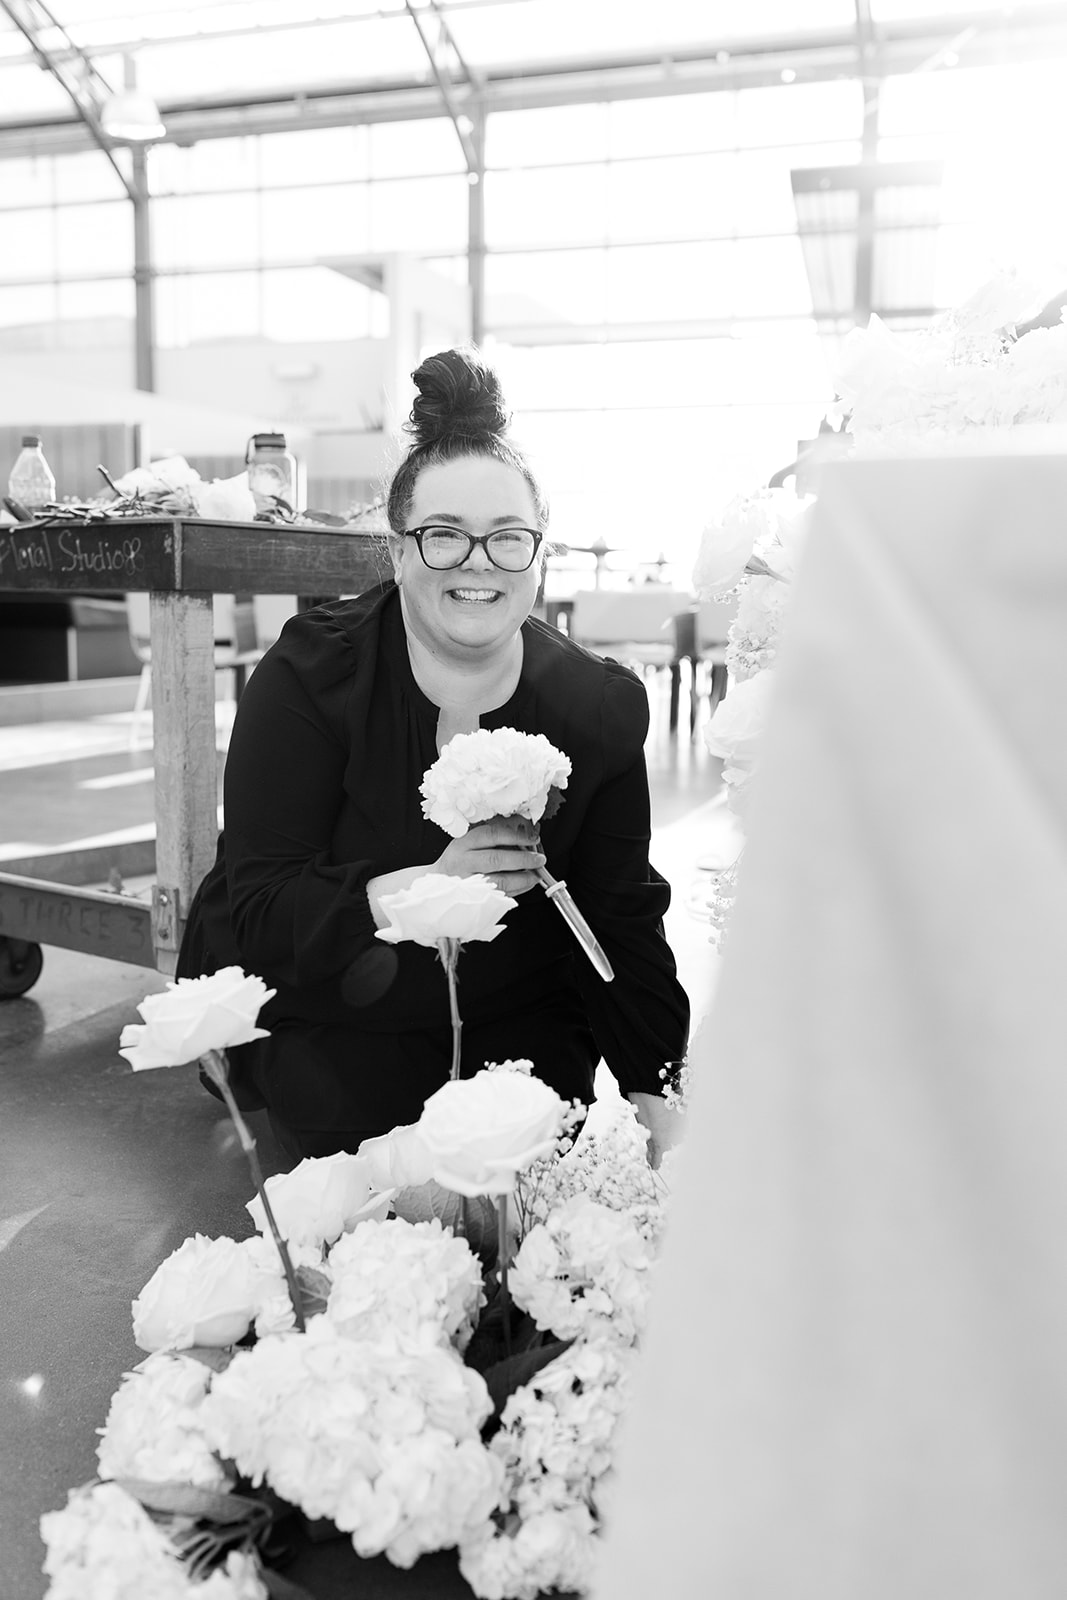 Ashley Rose working on floral arrangement | Salisbury Floral Studio - St. Albert